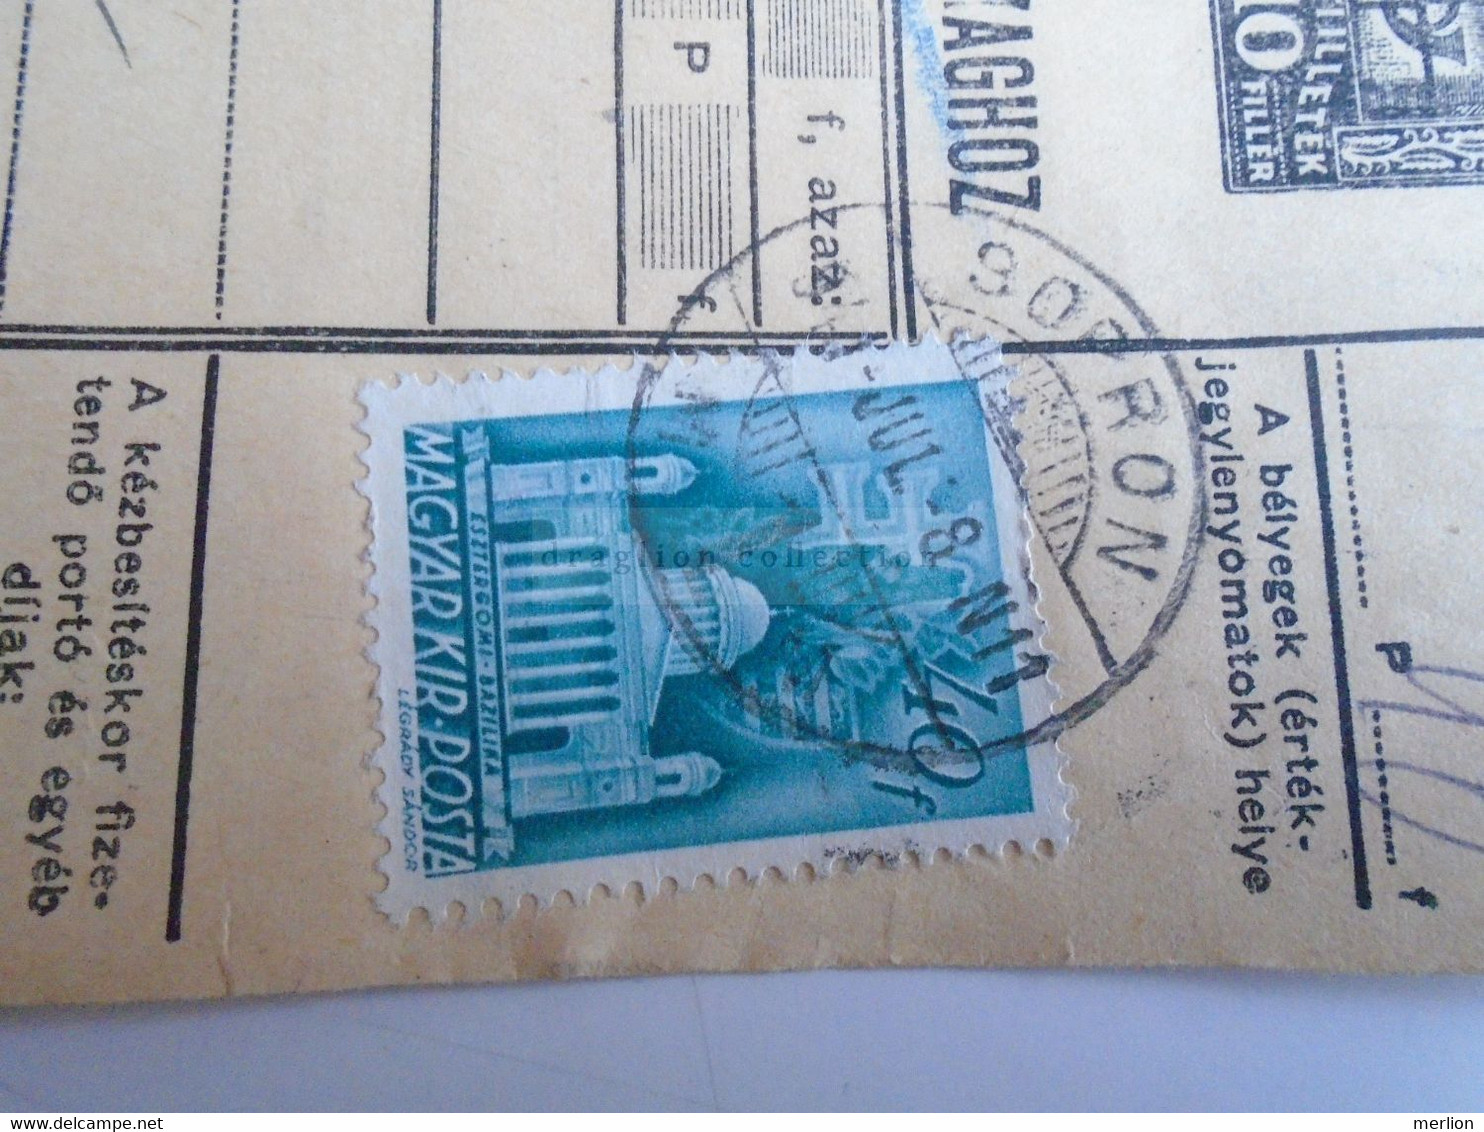 D187437   Parcel Card  (cut) Hungary 1941 SOPRON  -Kapuvár - Pacchi Postali